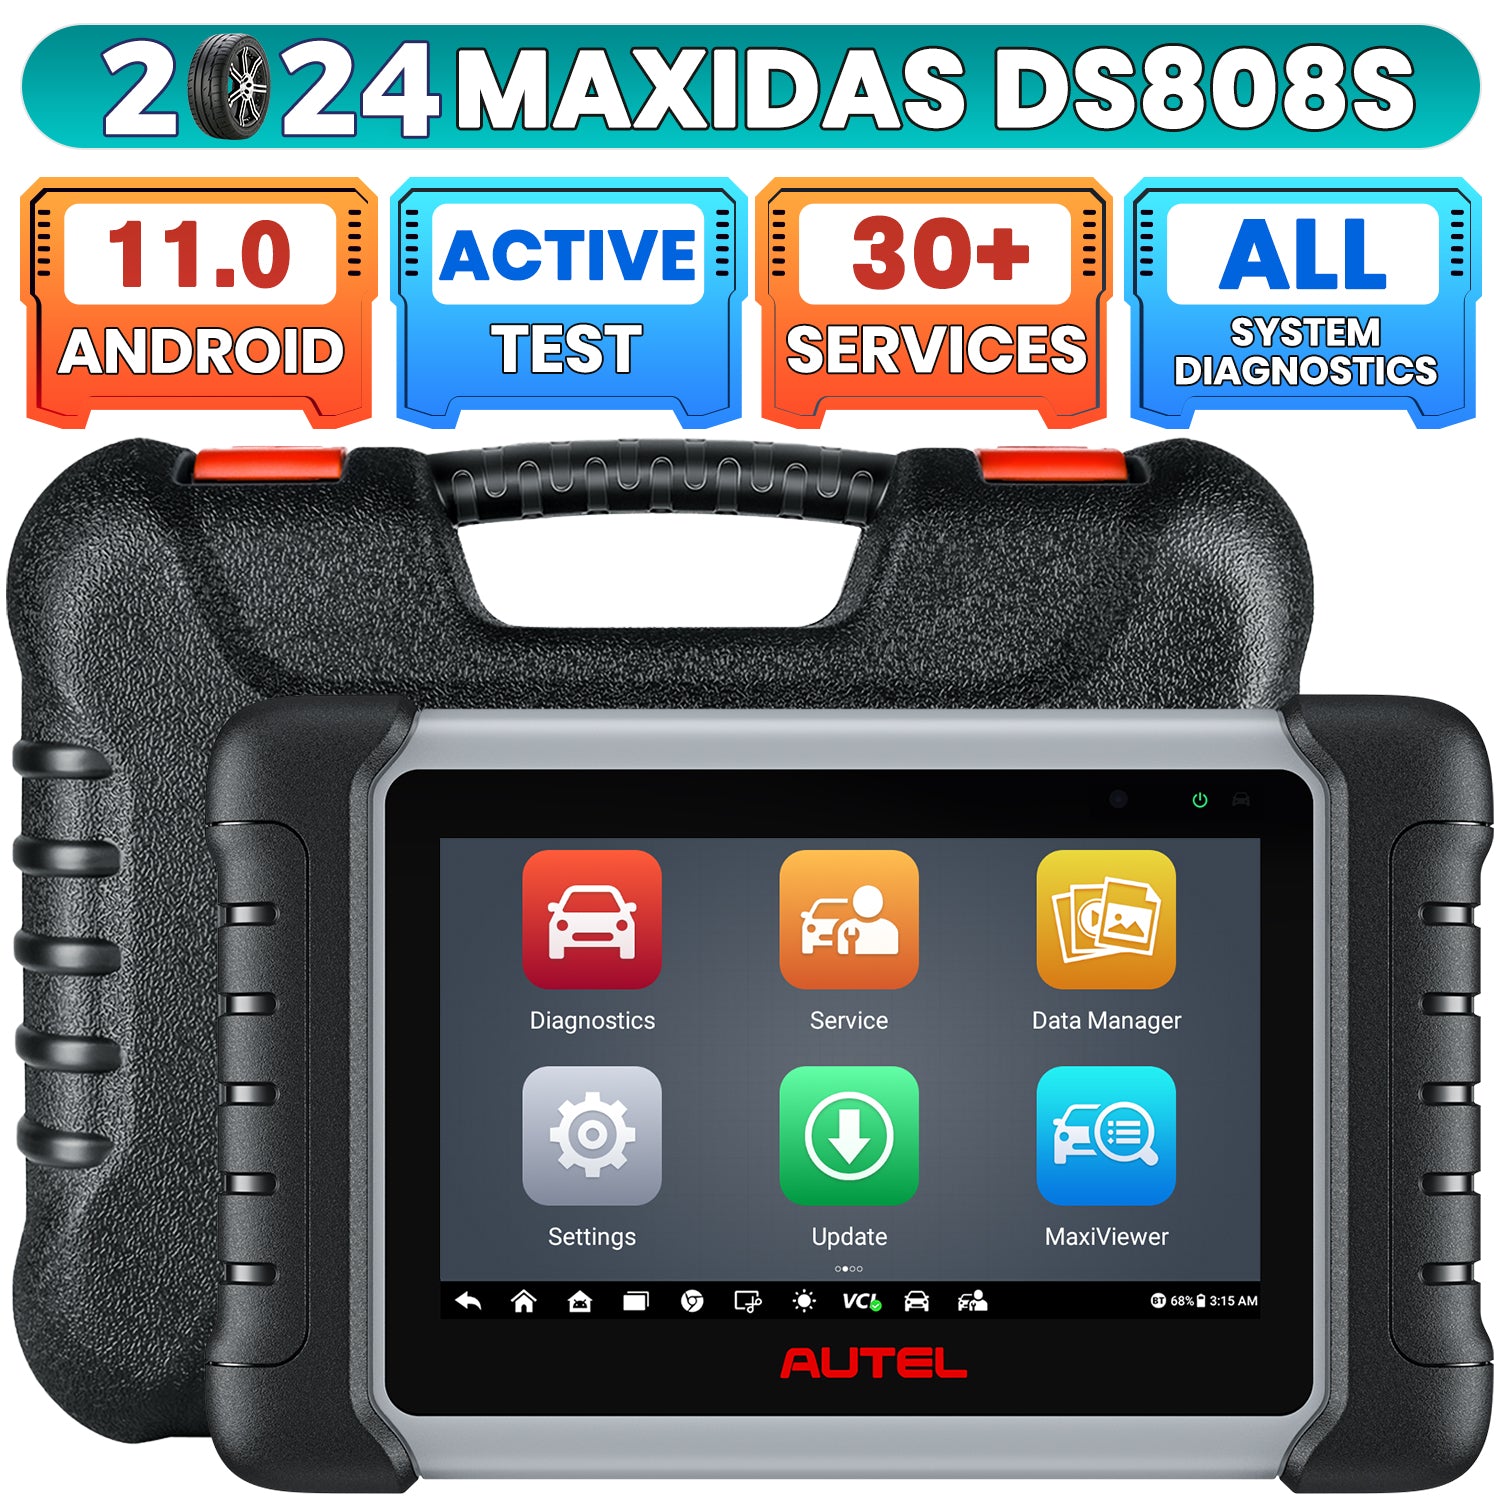 MaxiDAS DS808s